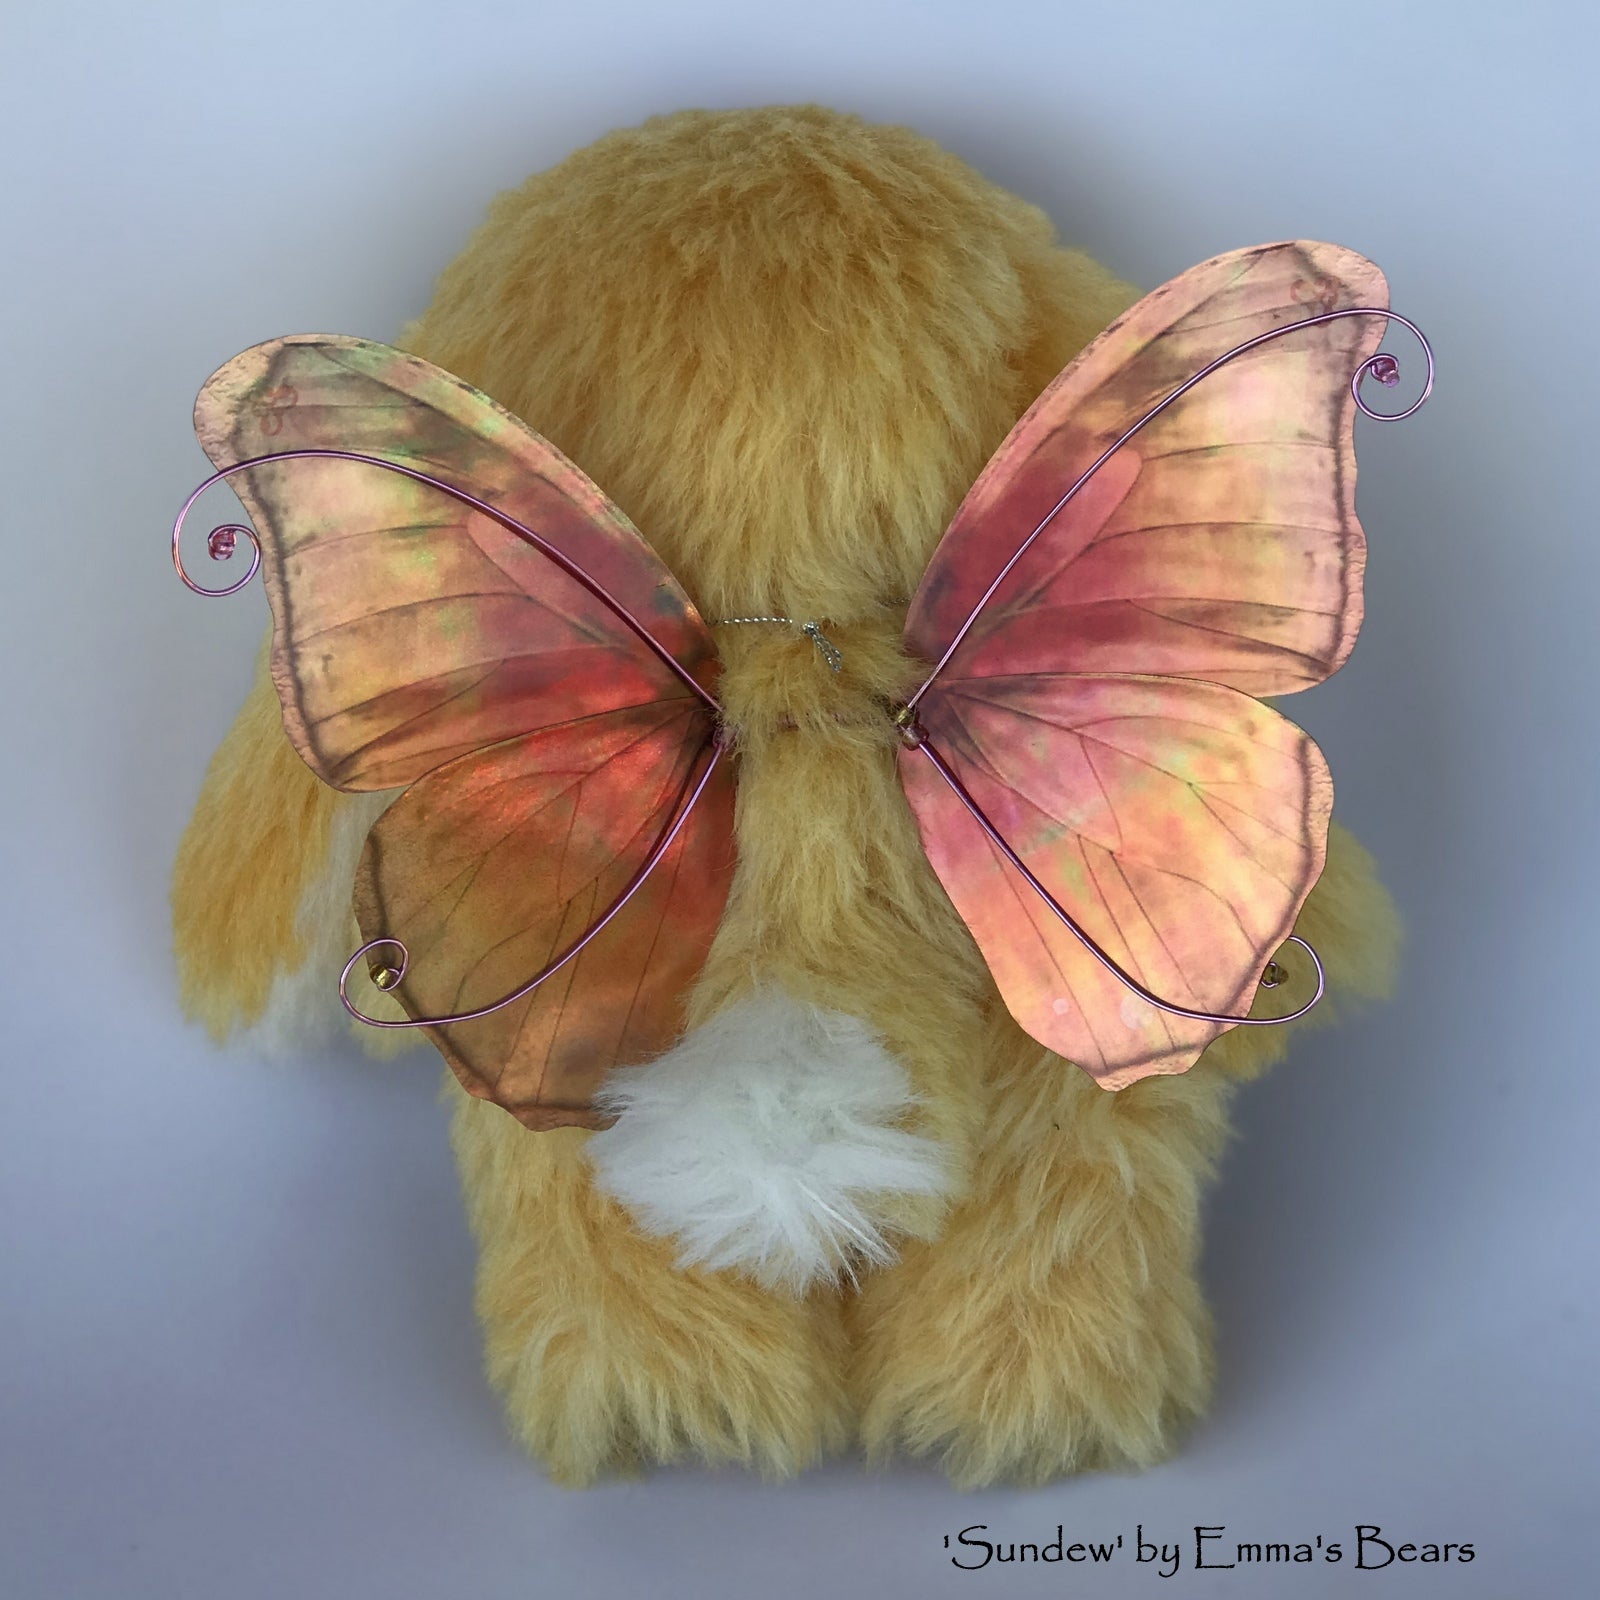 Sundew - 9" Hand dyed alpaca artist Easter Bunny by Emma's Bears - OOAK